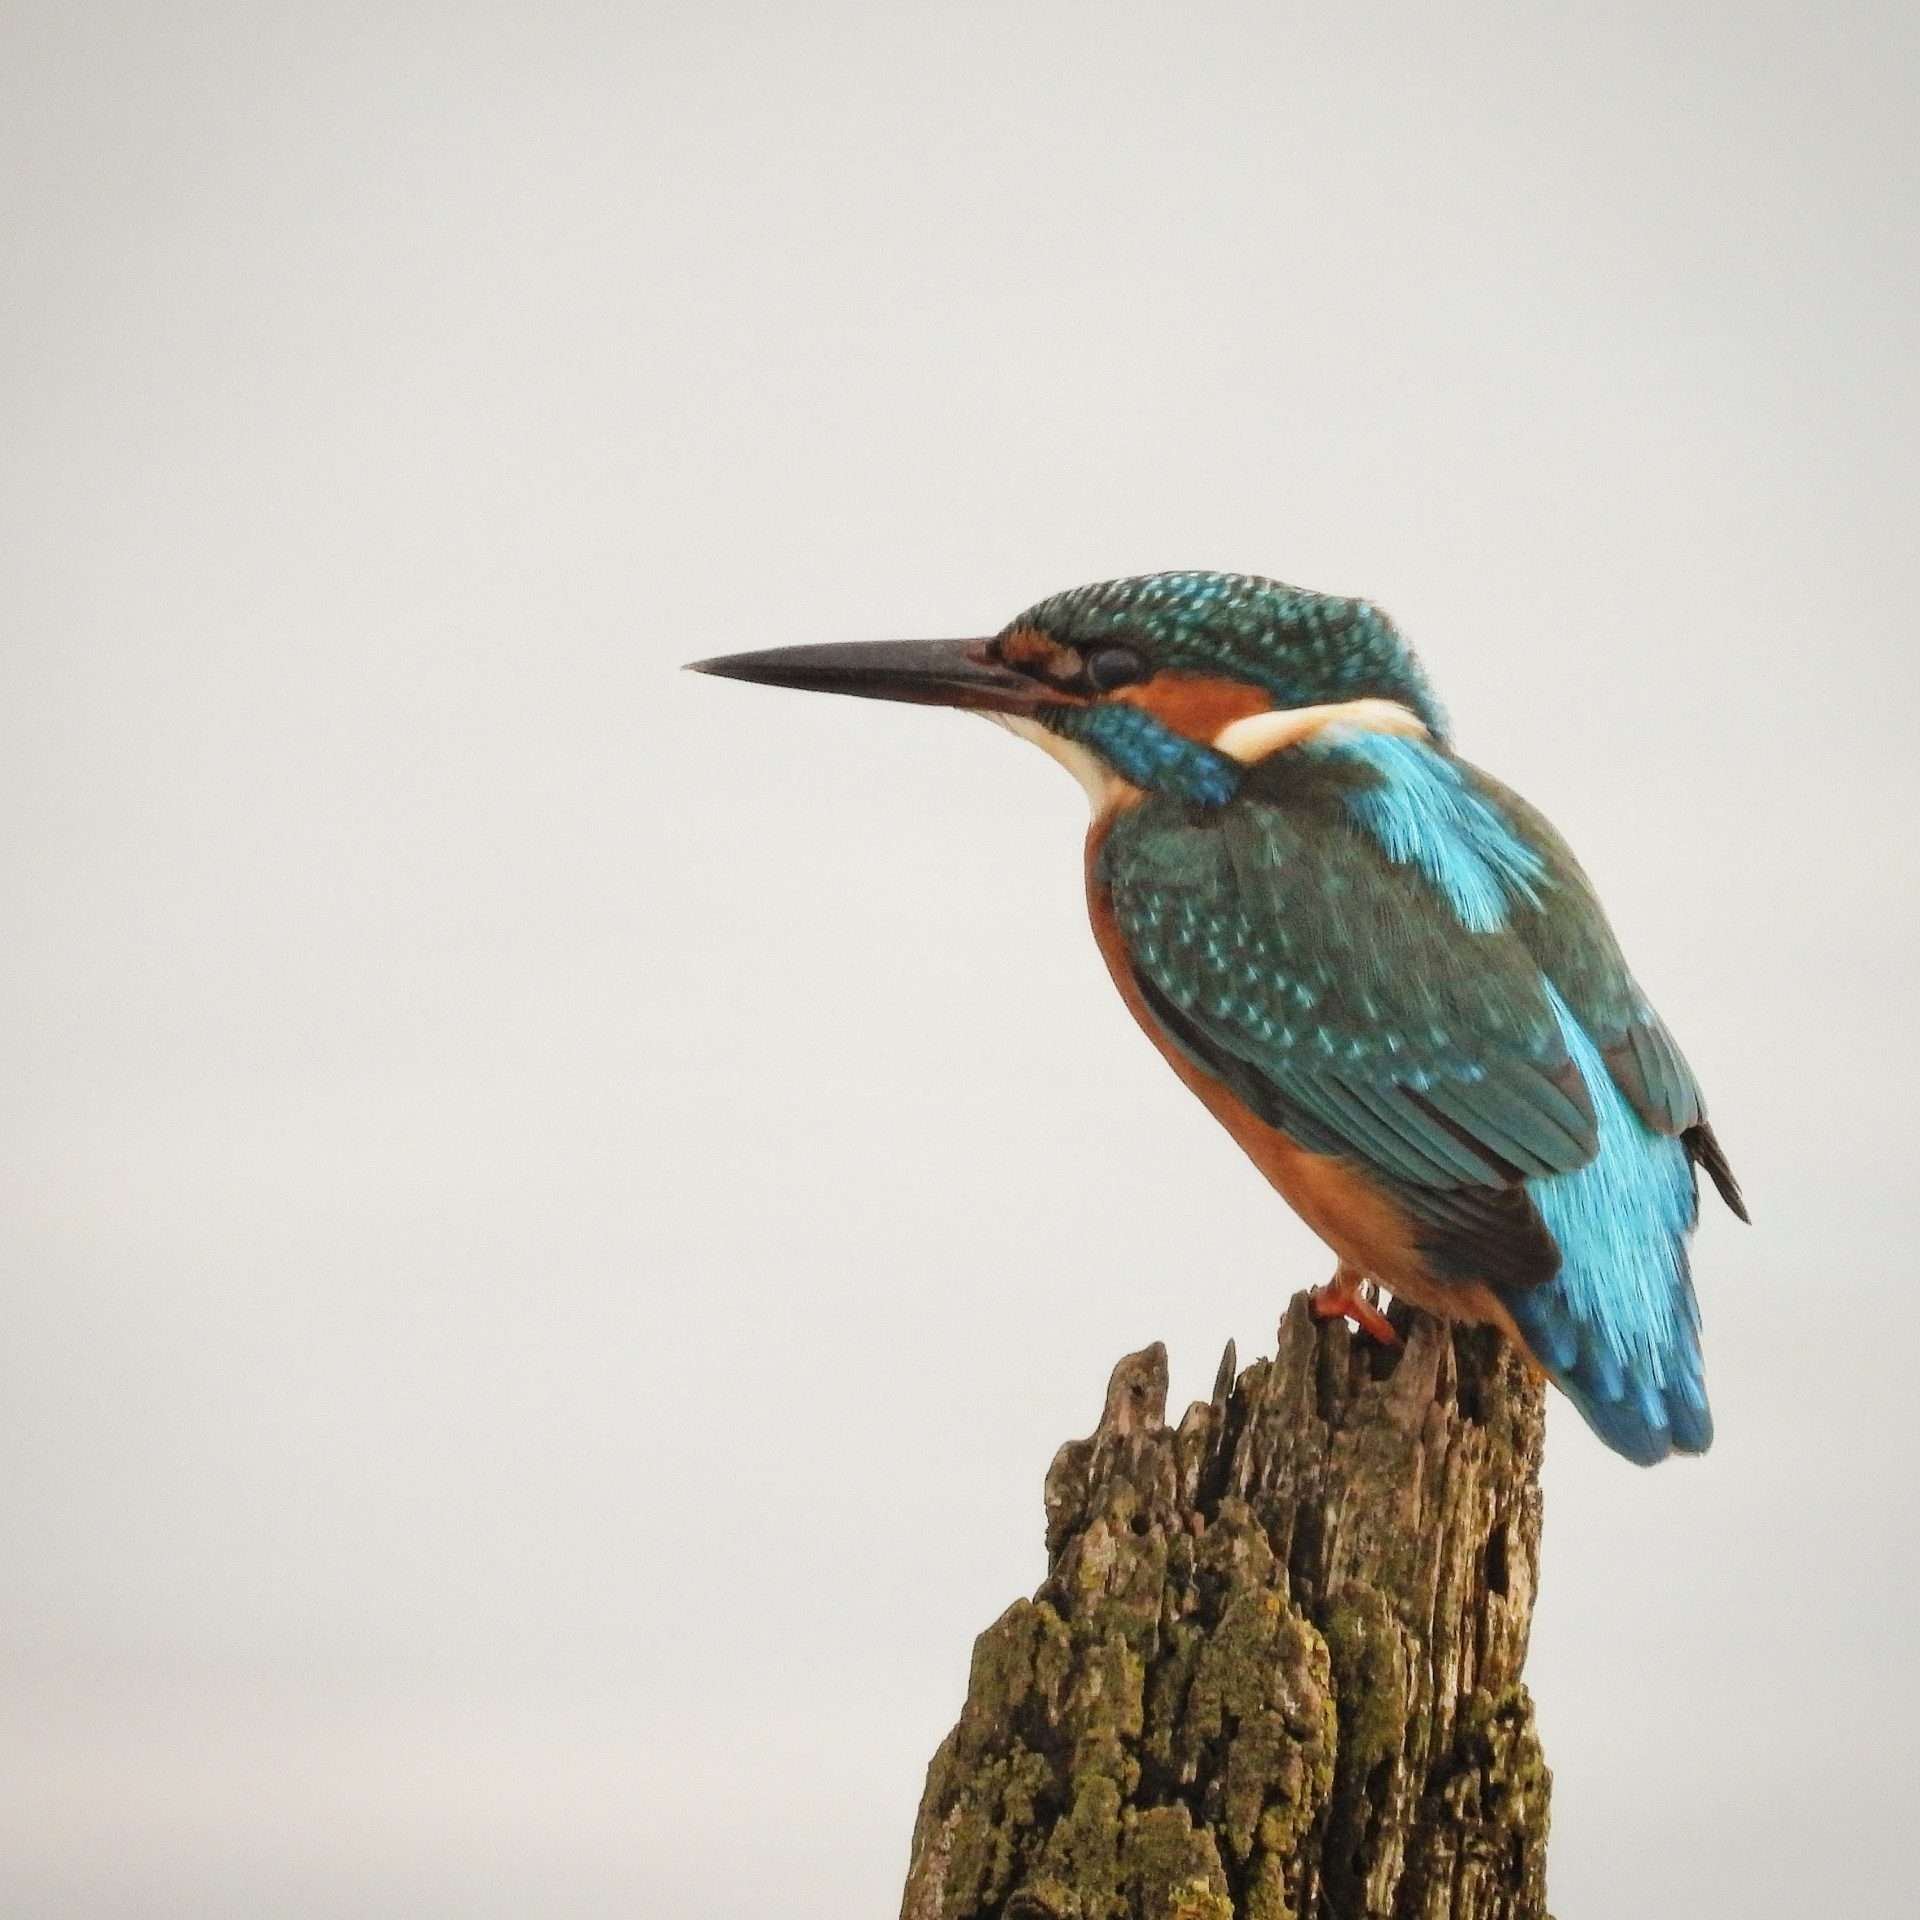 Kingfisher by Jason Jones at Exe estuary turf lock